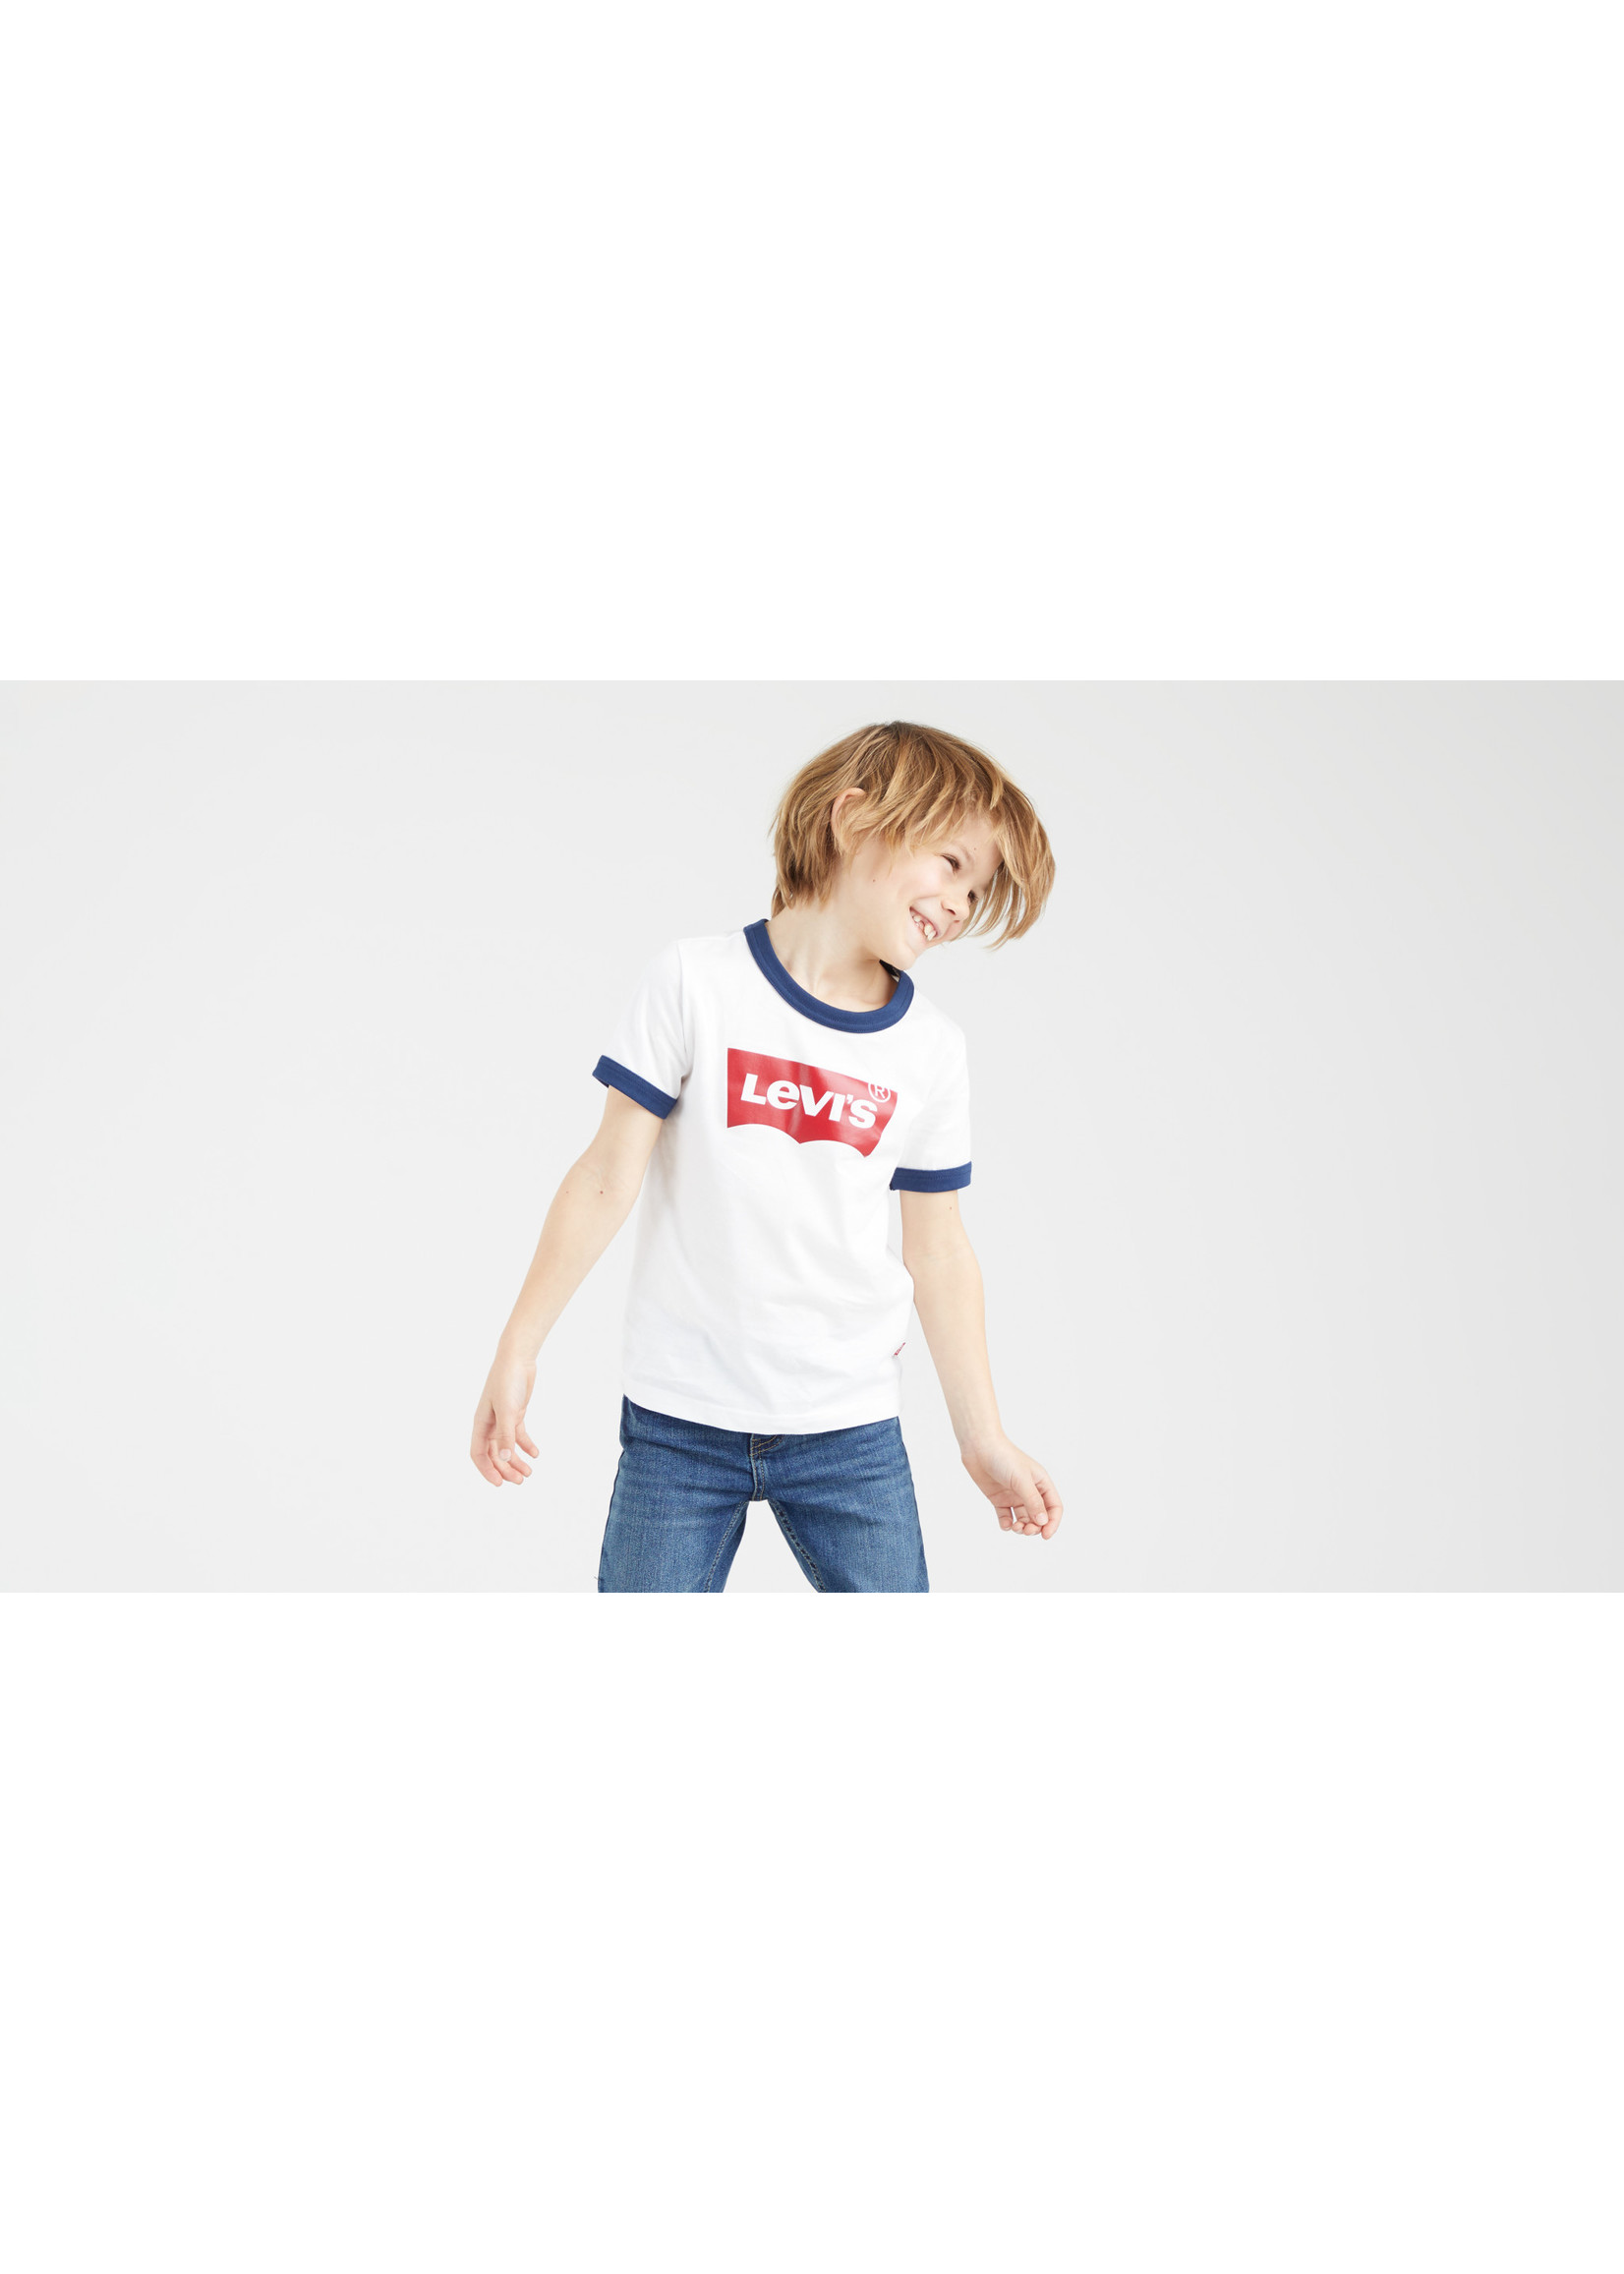 Levi's Levi's Boy t-shirt white/navy batwing logo - 8/9EA073 001